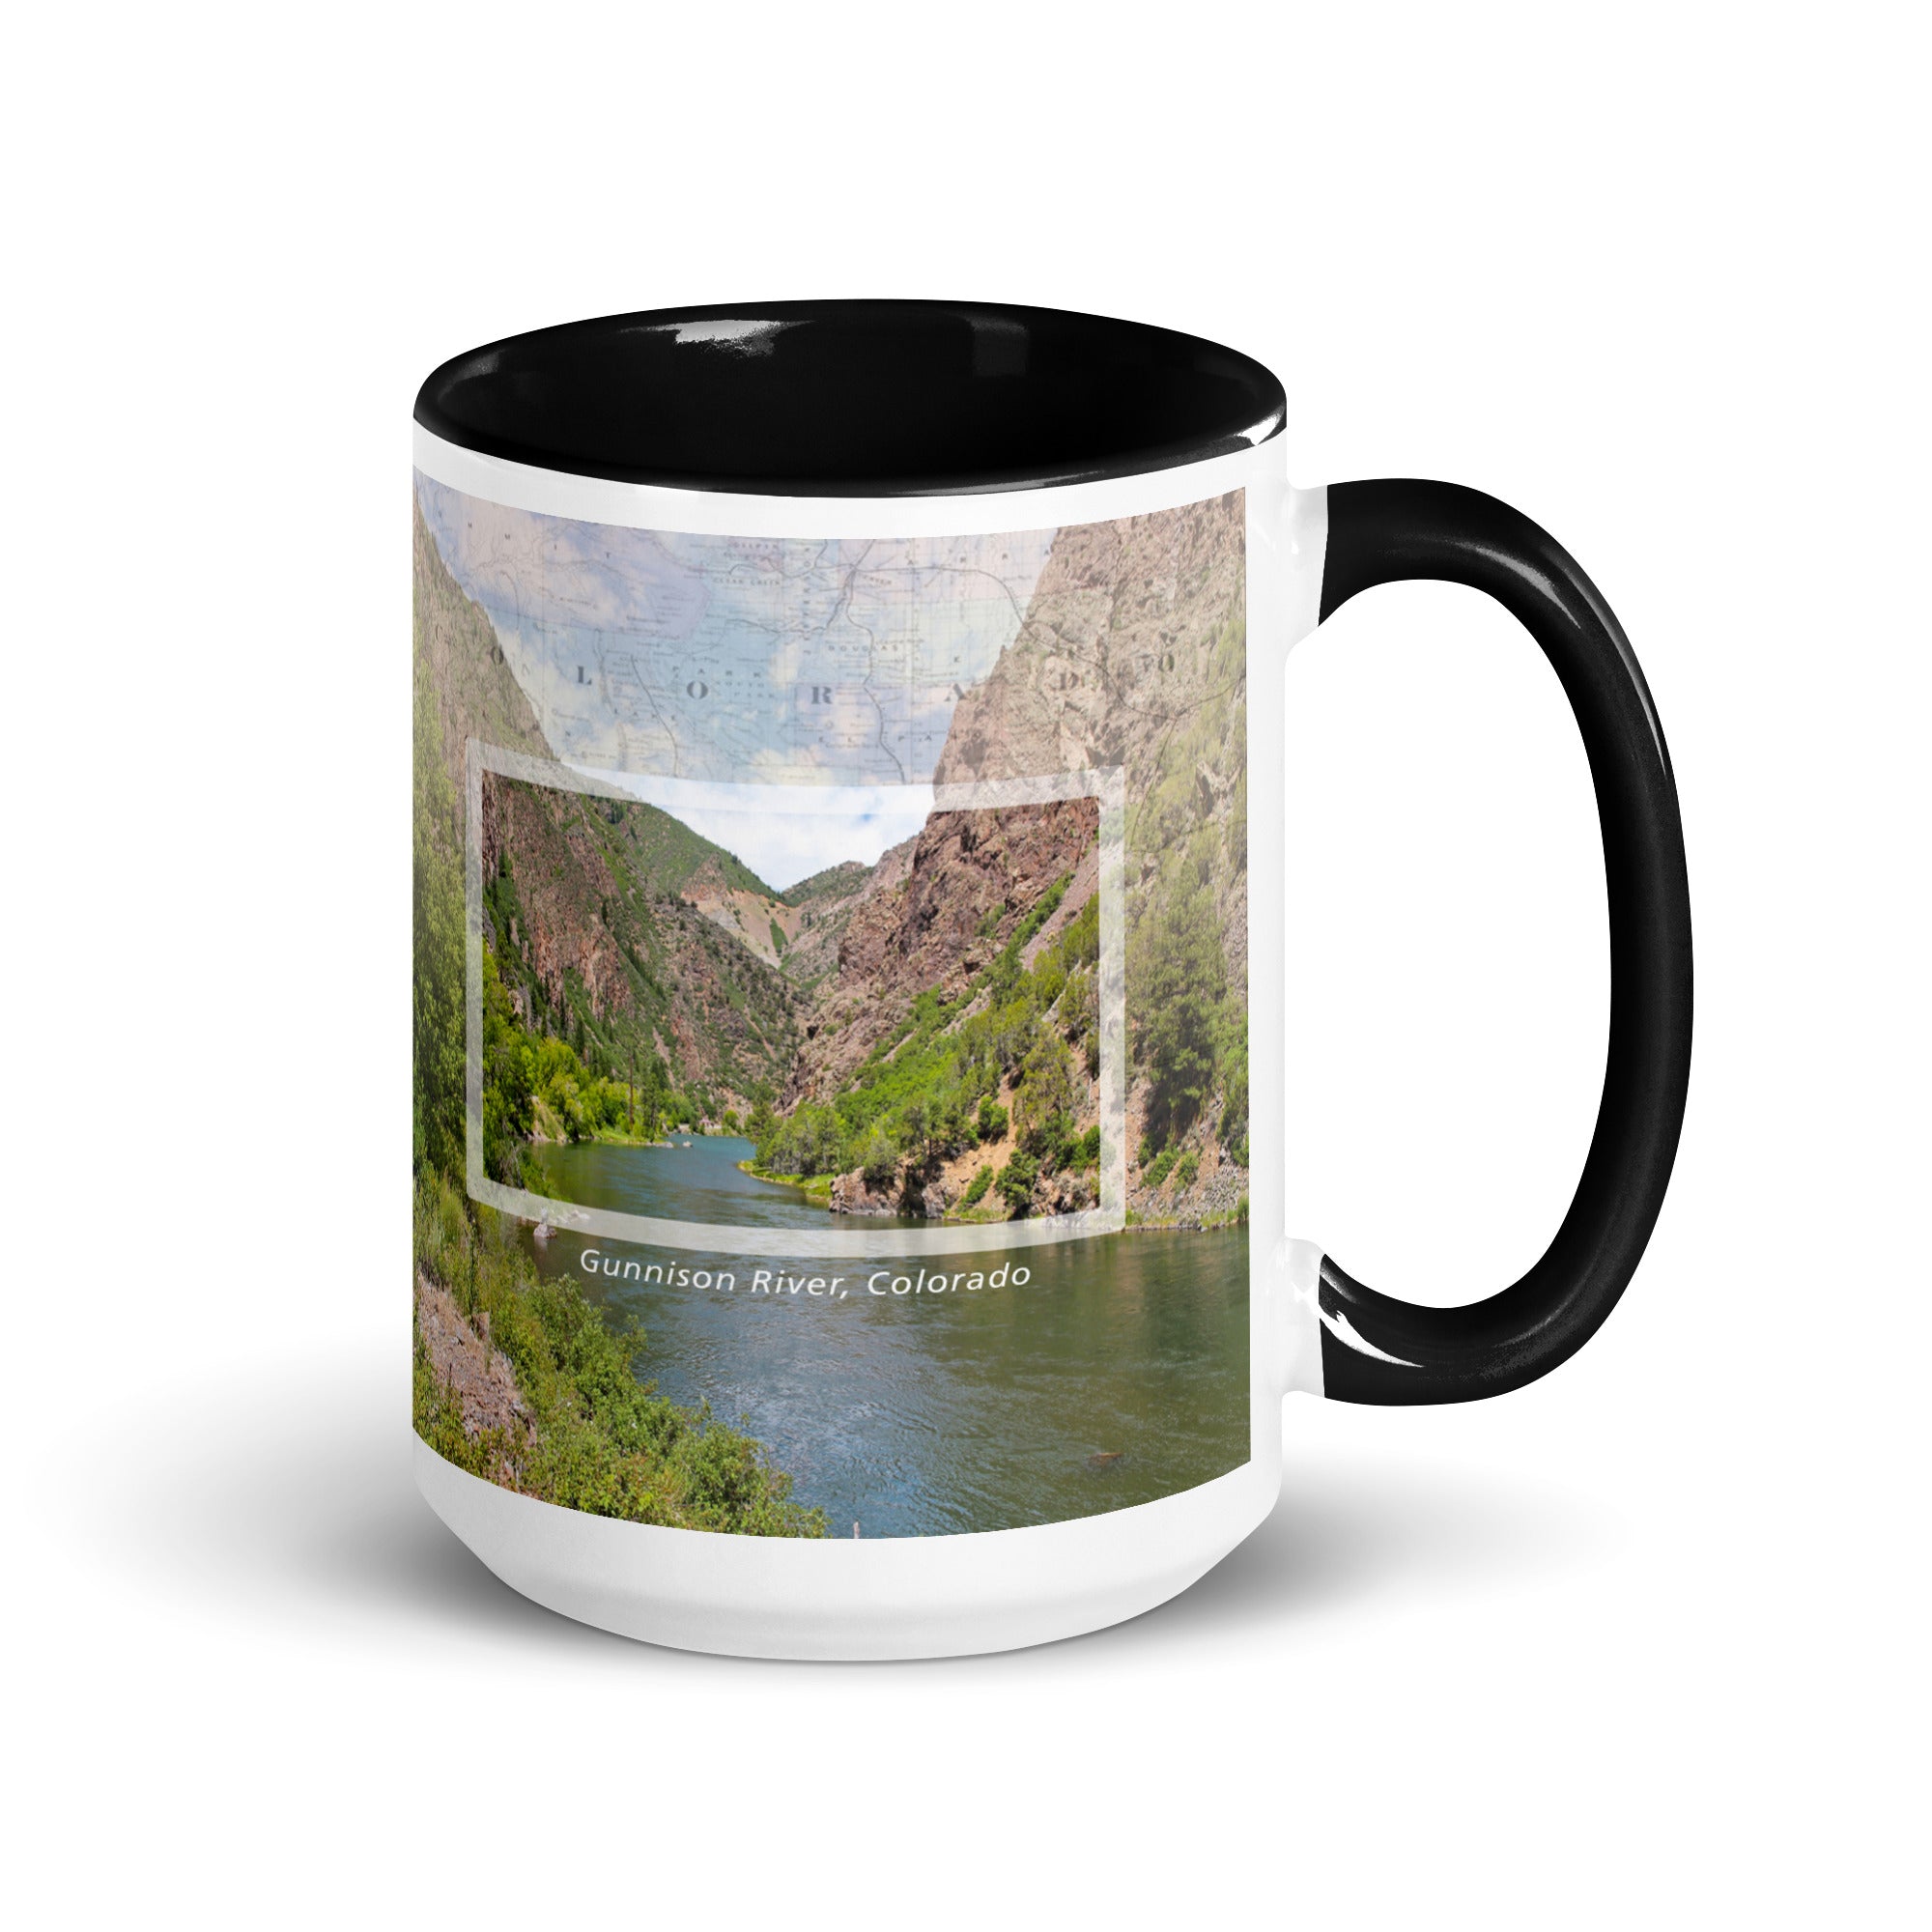 Black Canyon of the Gunnison National Park Mug with Black Inside